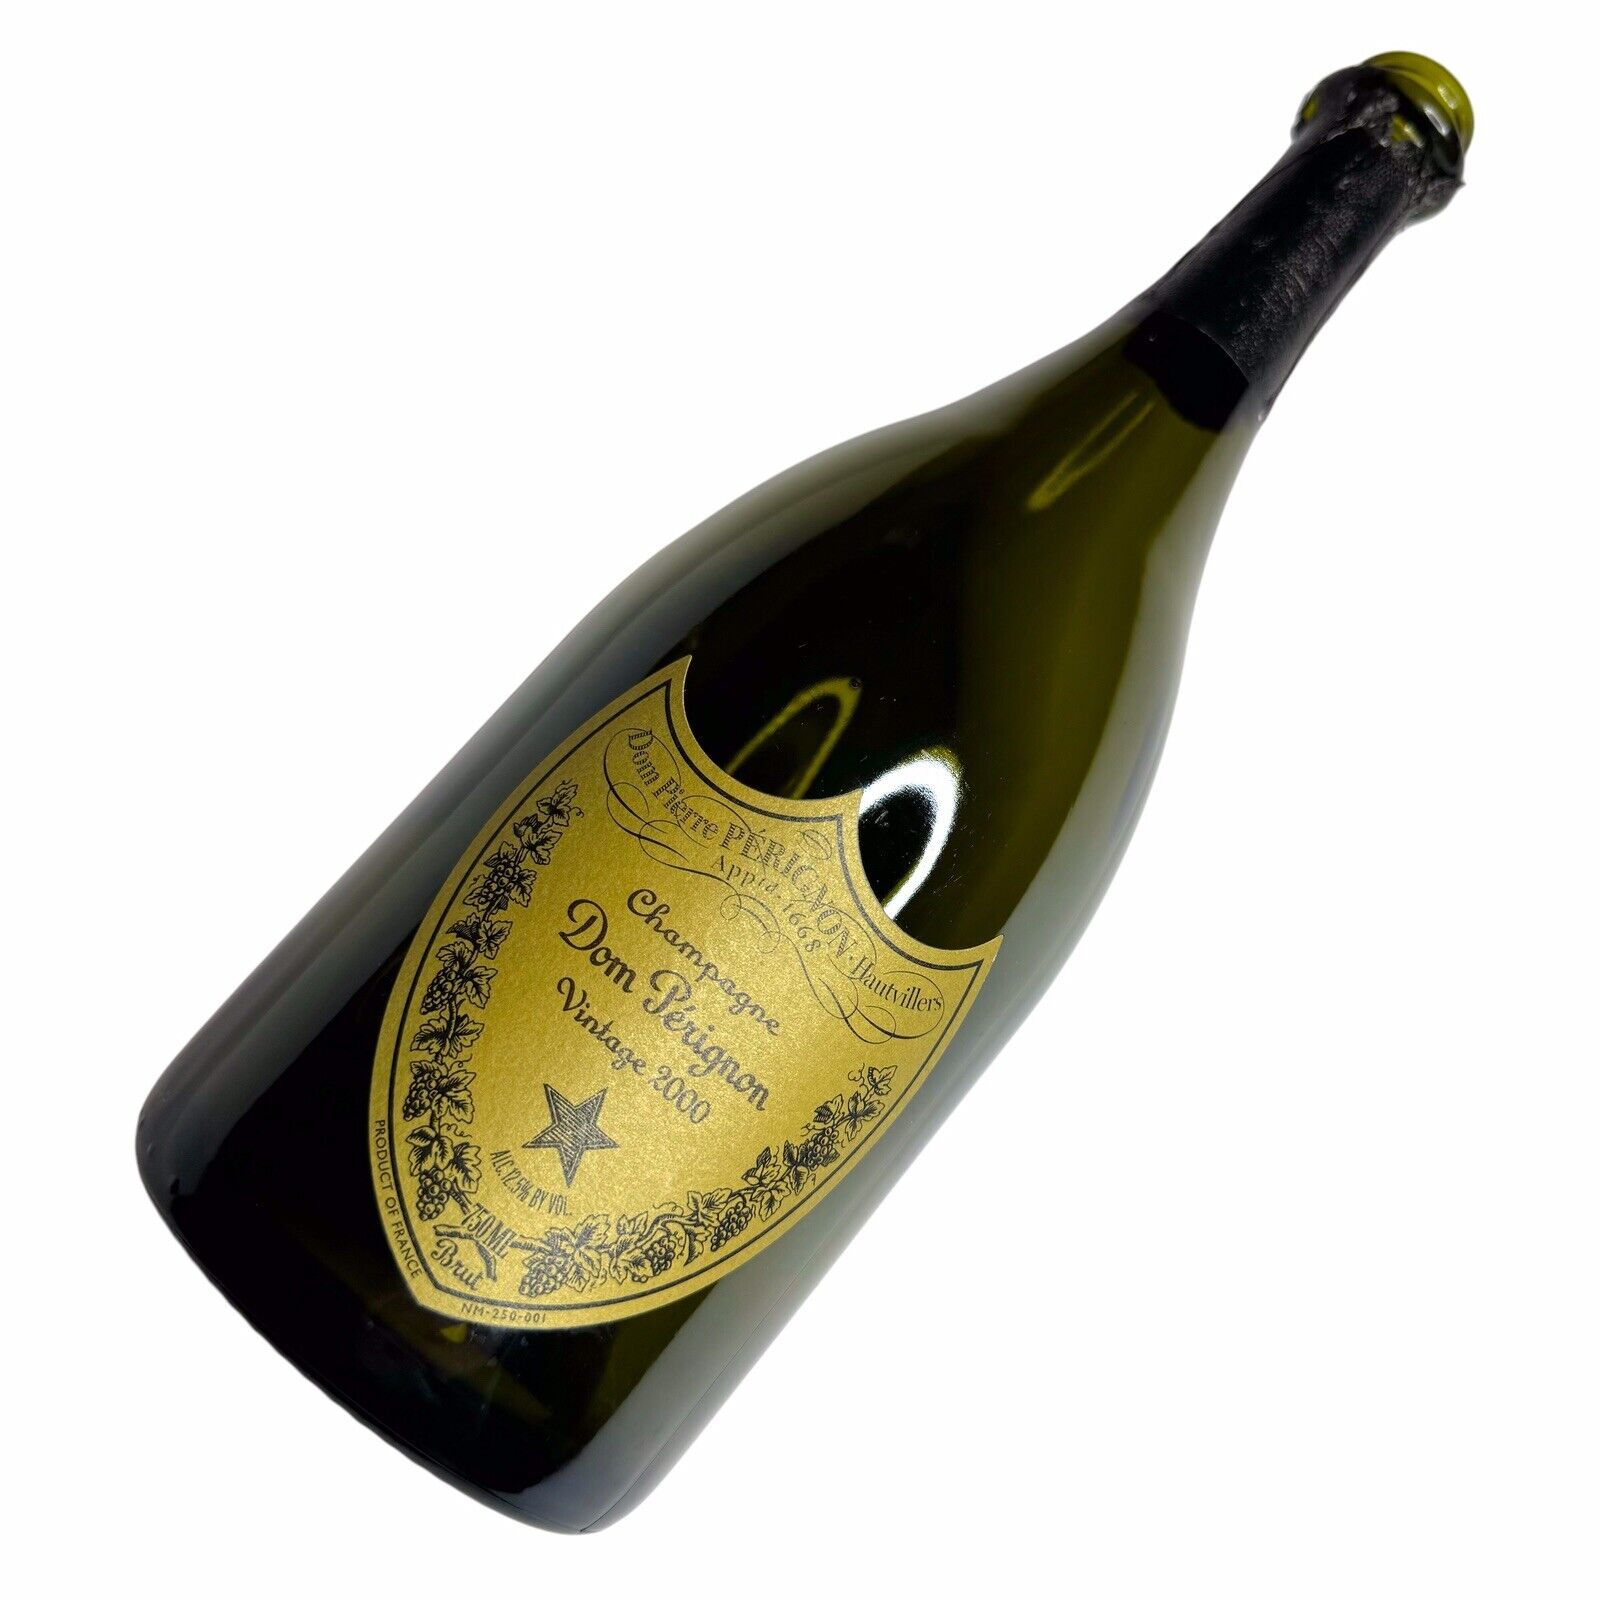 EMPTY 2000 Dom Perignon Brut Champagne Bottle